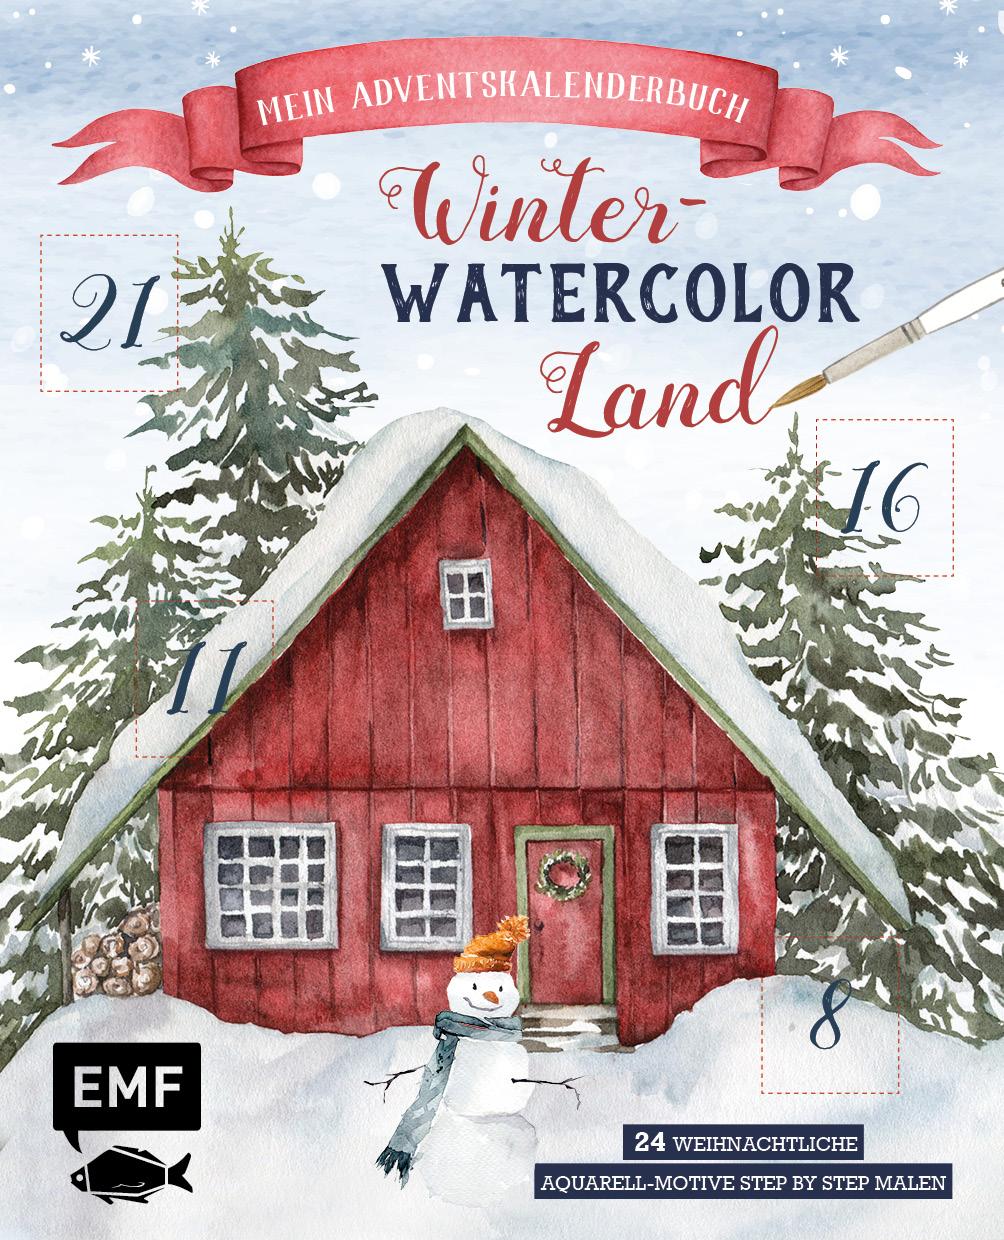 Book Mein Adventskalender-Buch: Winter-Watercolor-Land 